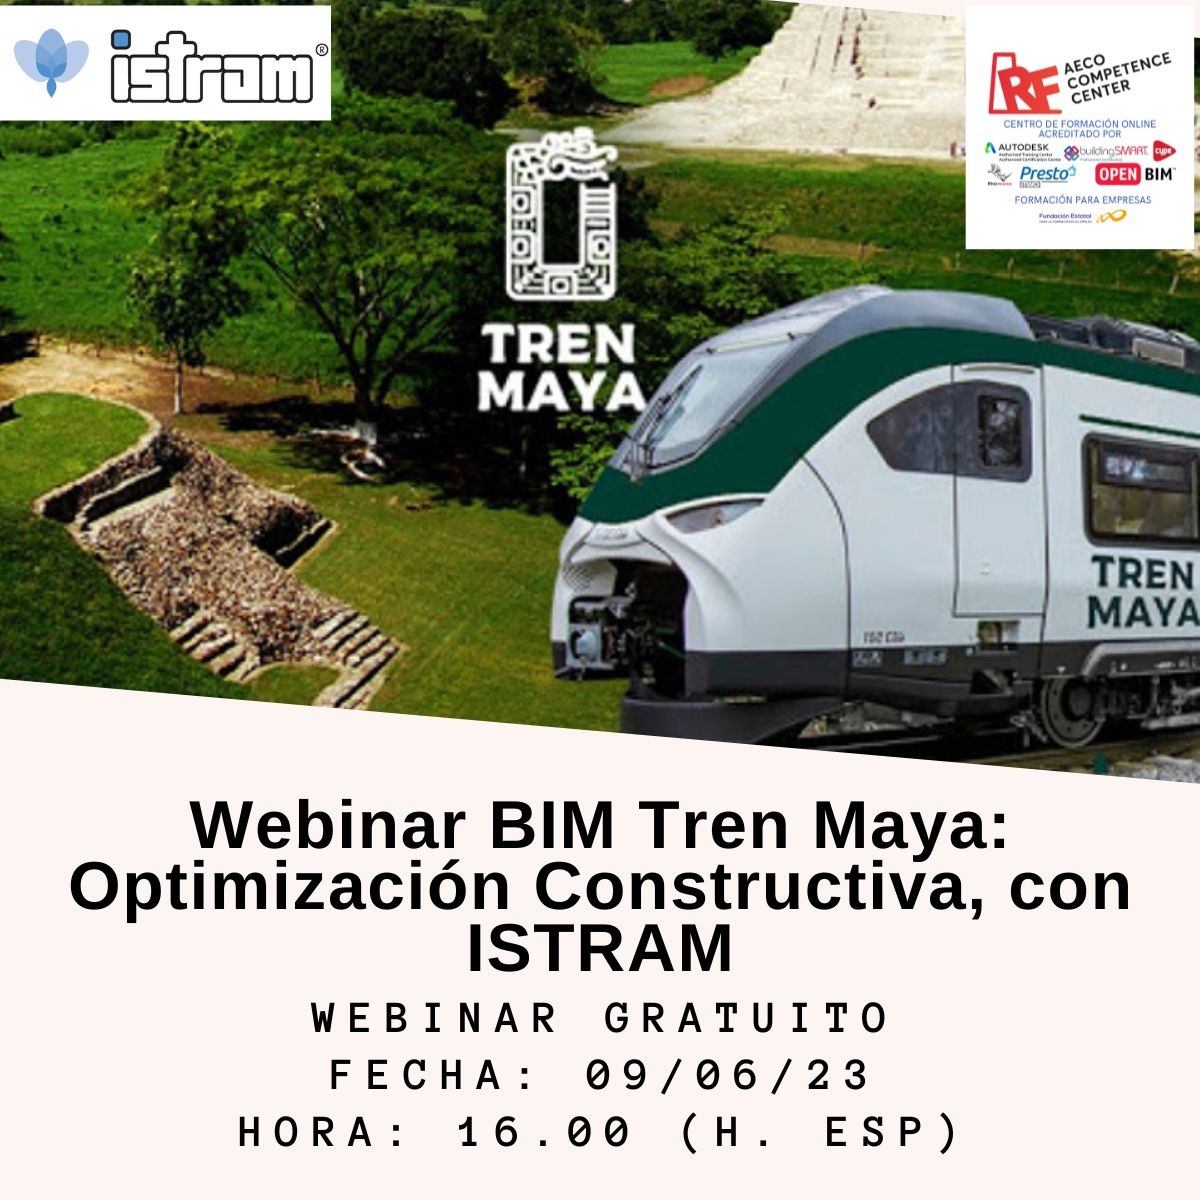 BIM Tren Maya Optimización Constructiva. (1)